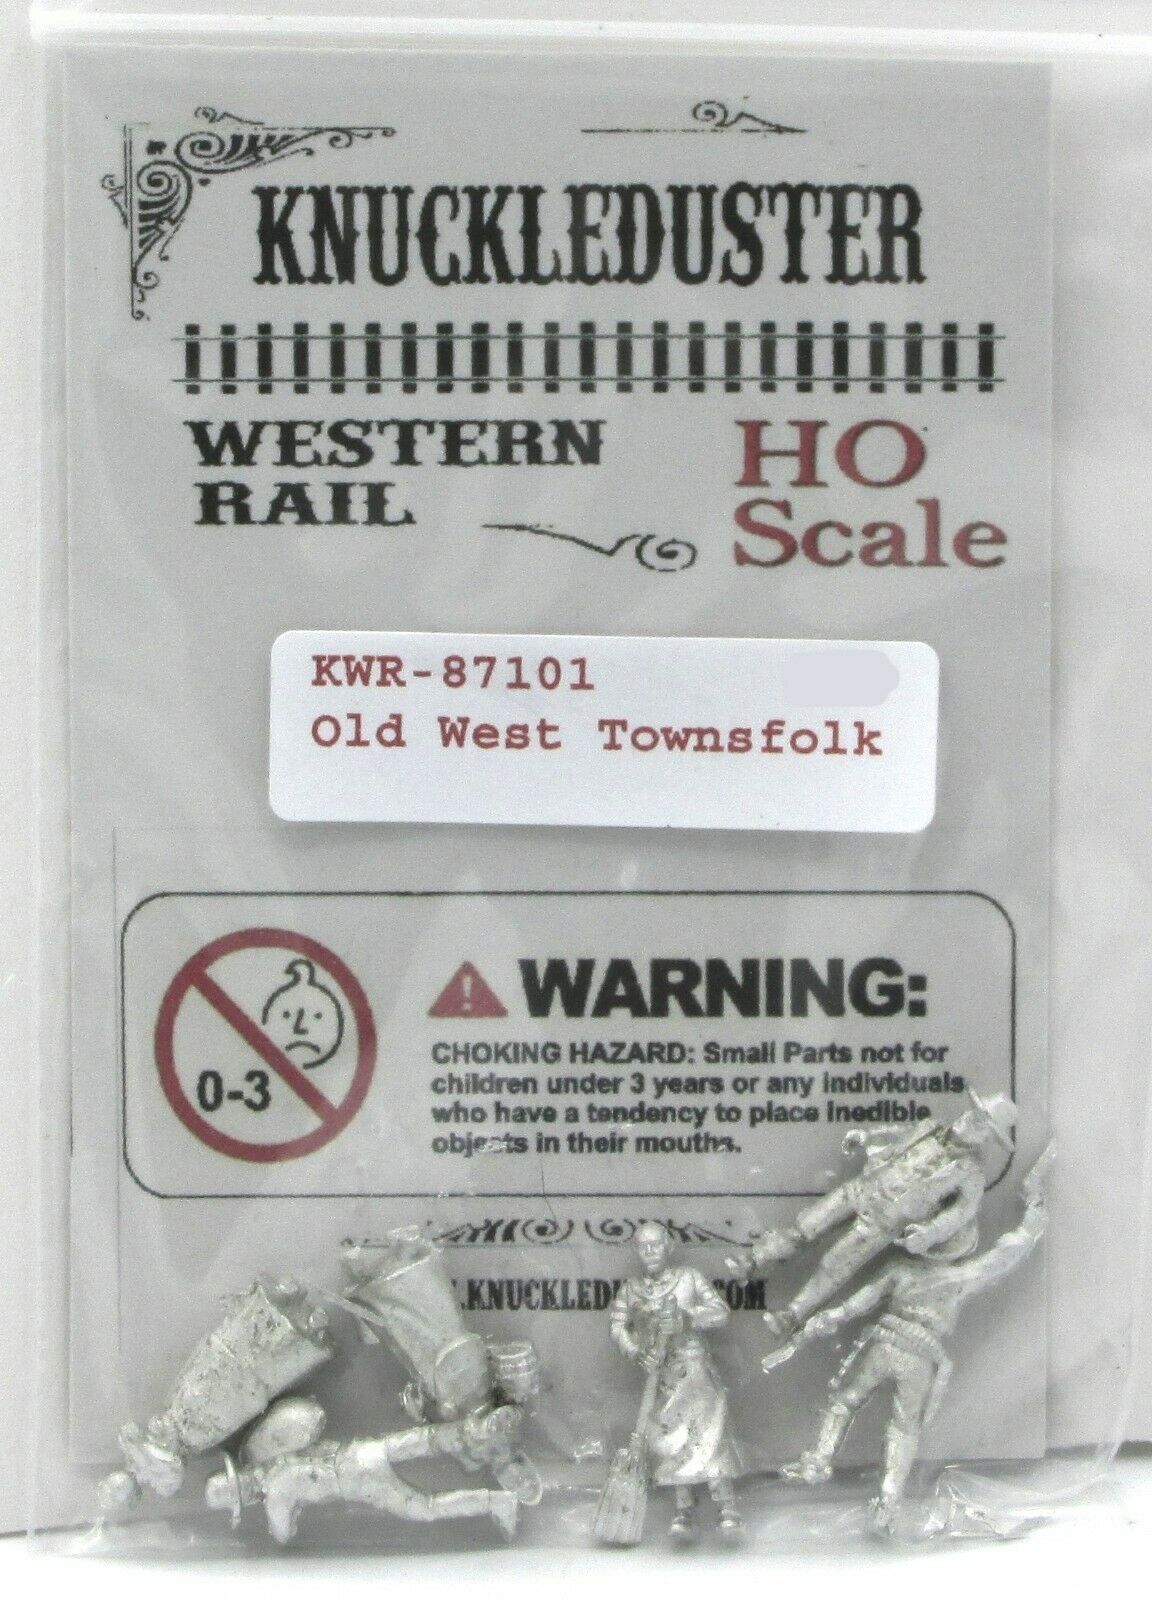 Knuckleduster Kwr-87101 Old West Townsfolk (ho  Scale) Western Rail Civilians